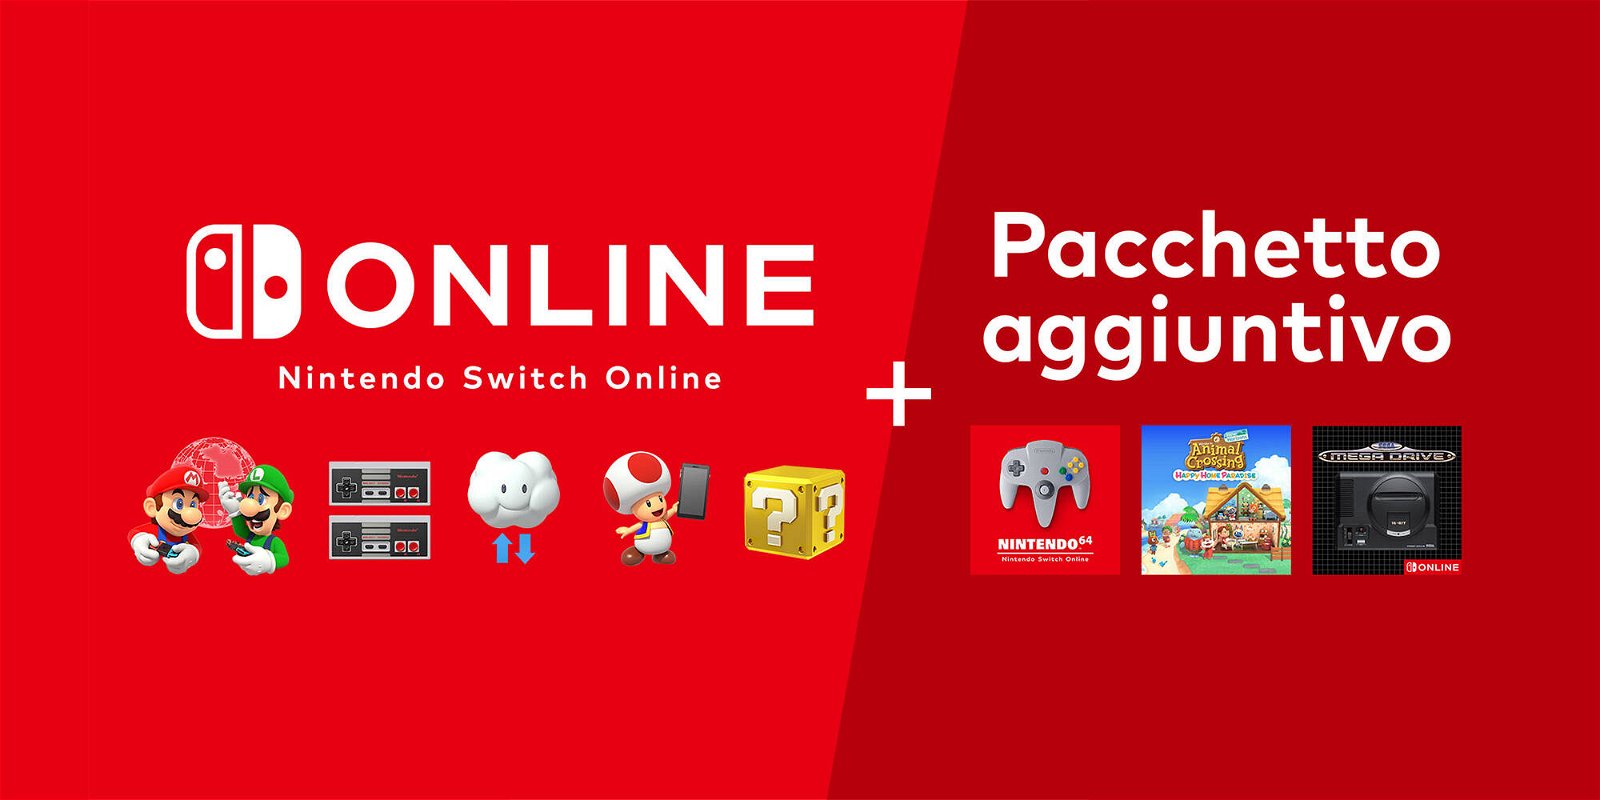 Nintendo Switch Online si aggiorna, arrivano i nuovi bonus gratis